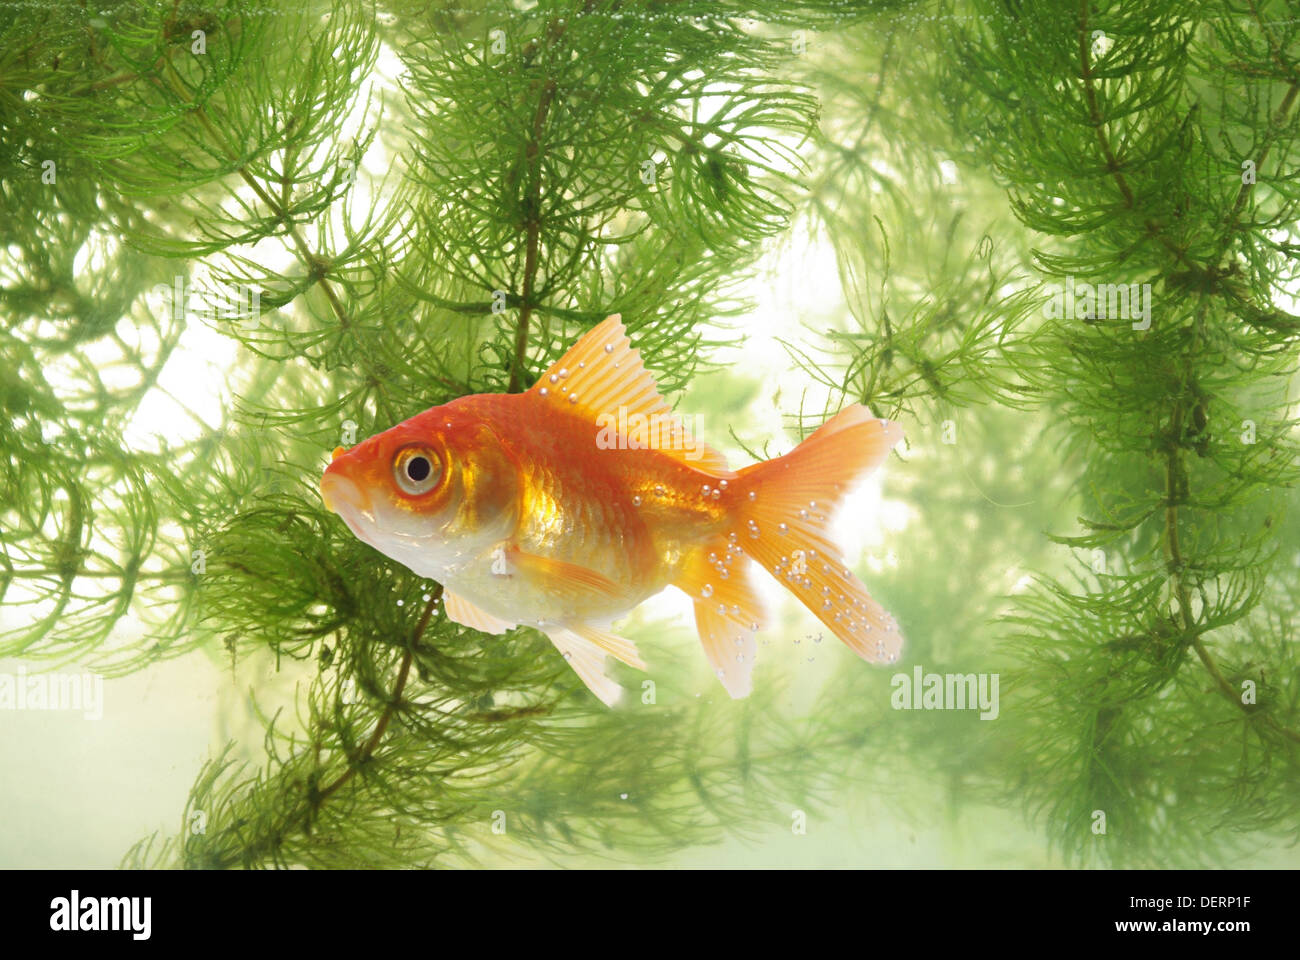 swimming between green plants fish Stock Photo